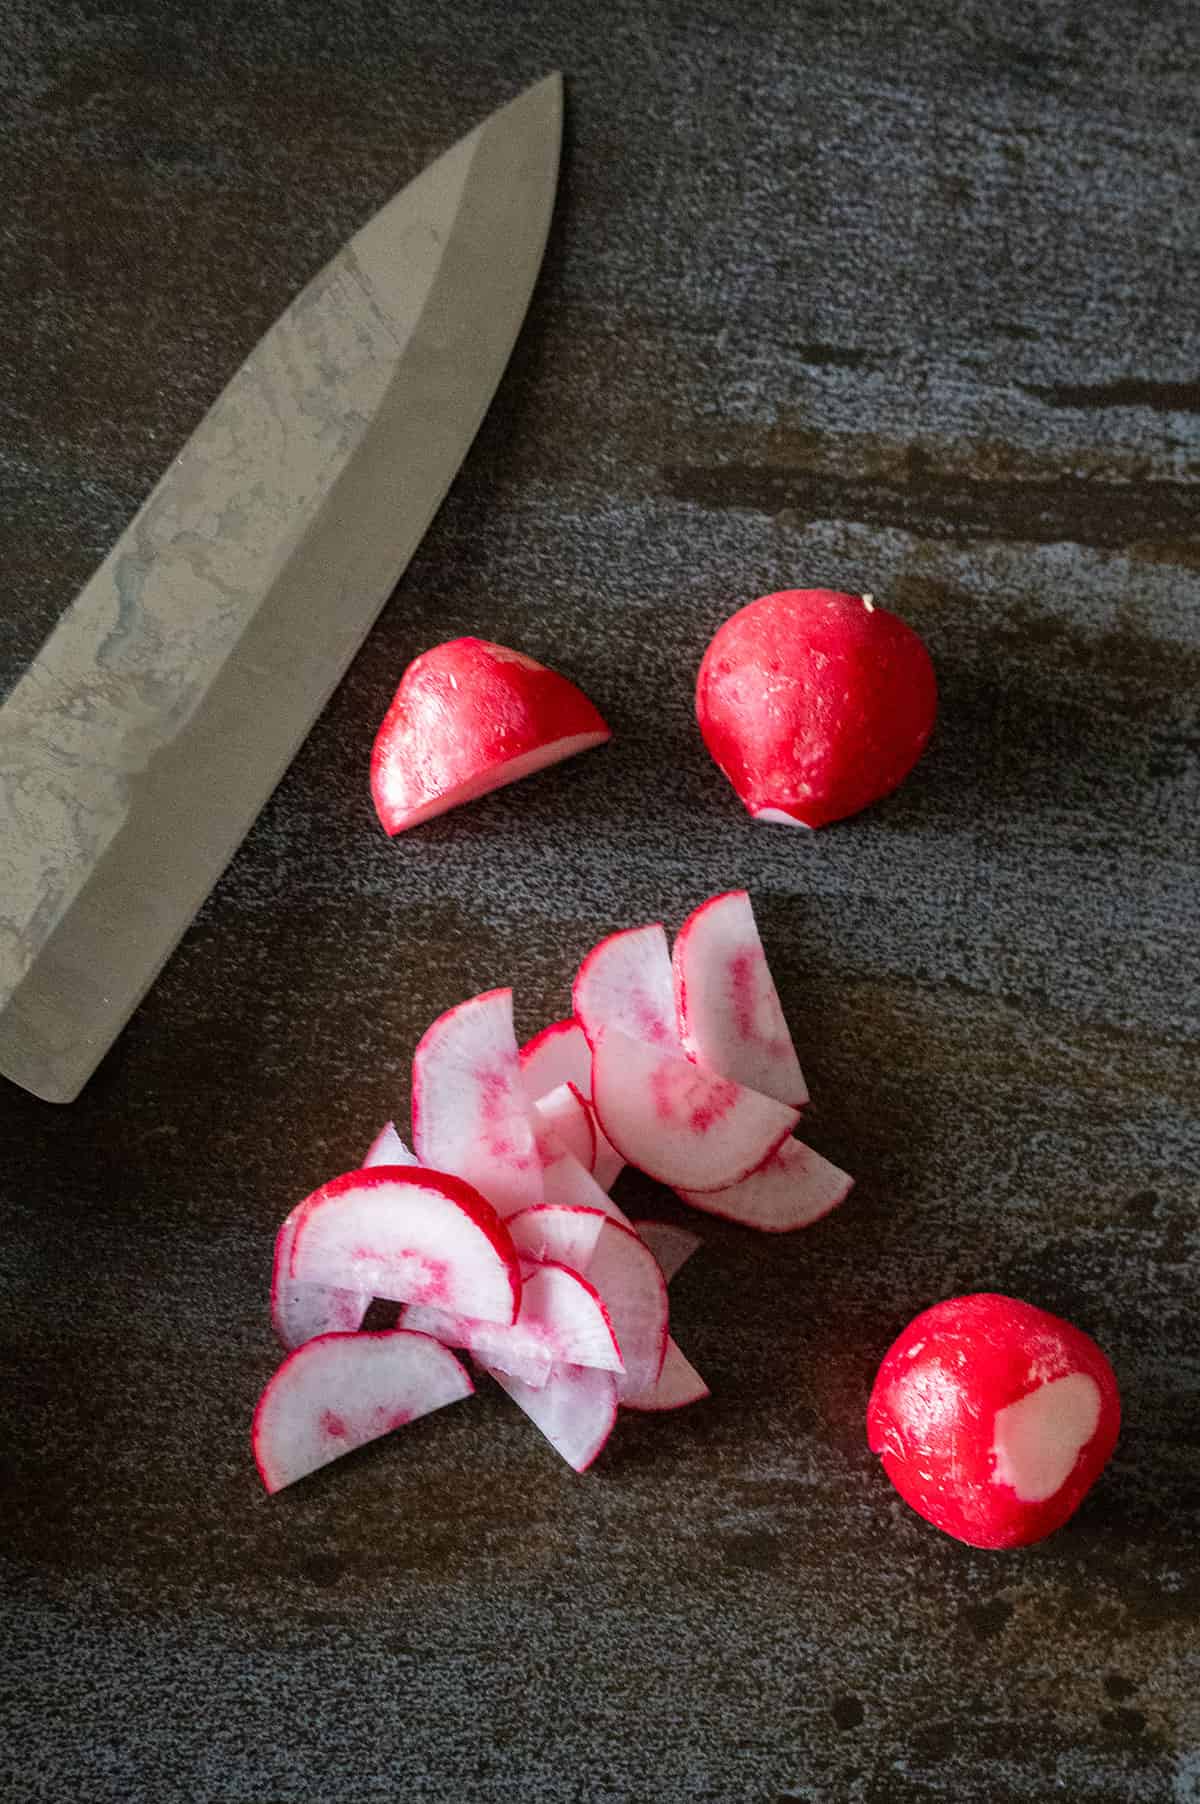 radish sliced in half and sliced thin.